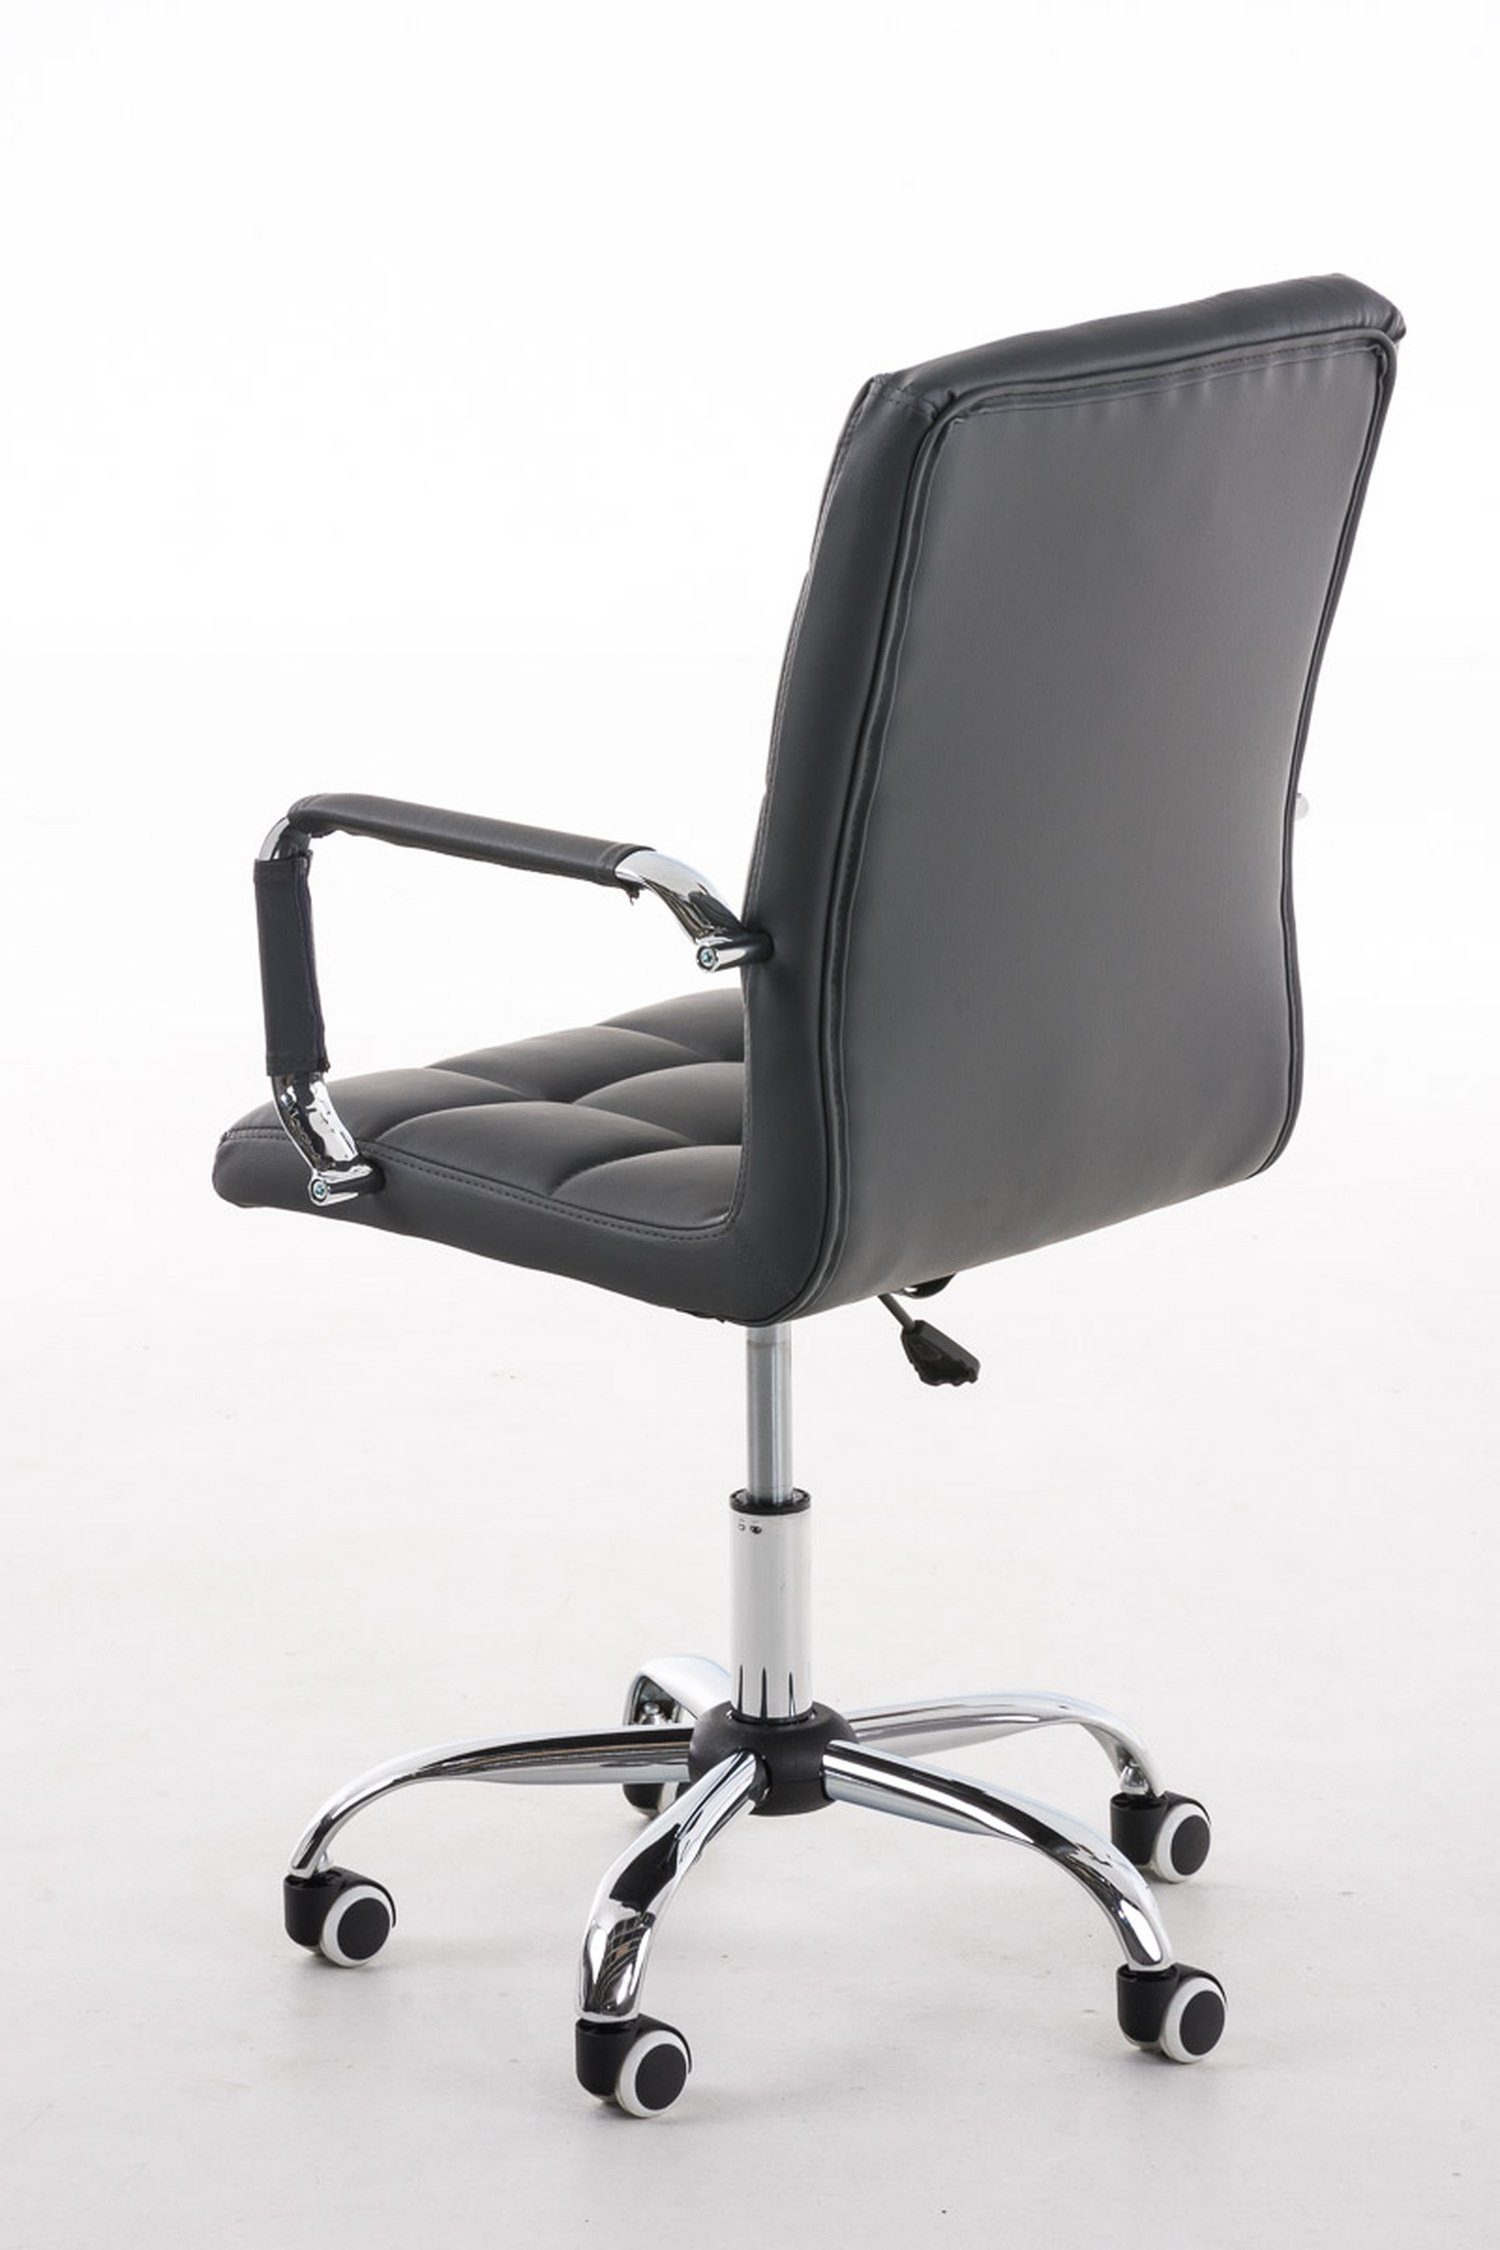 TPFLiving Bürostuhl Deal V2 mit chrom Chefsessel), Drehstuhl, Konferenzstuhl, Sitzfläche: grau Gestell: Rückenlehne bequemer Metall - Kunstleder (Schreibtischstuhl